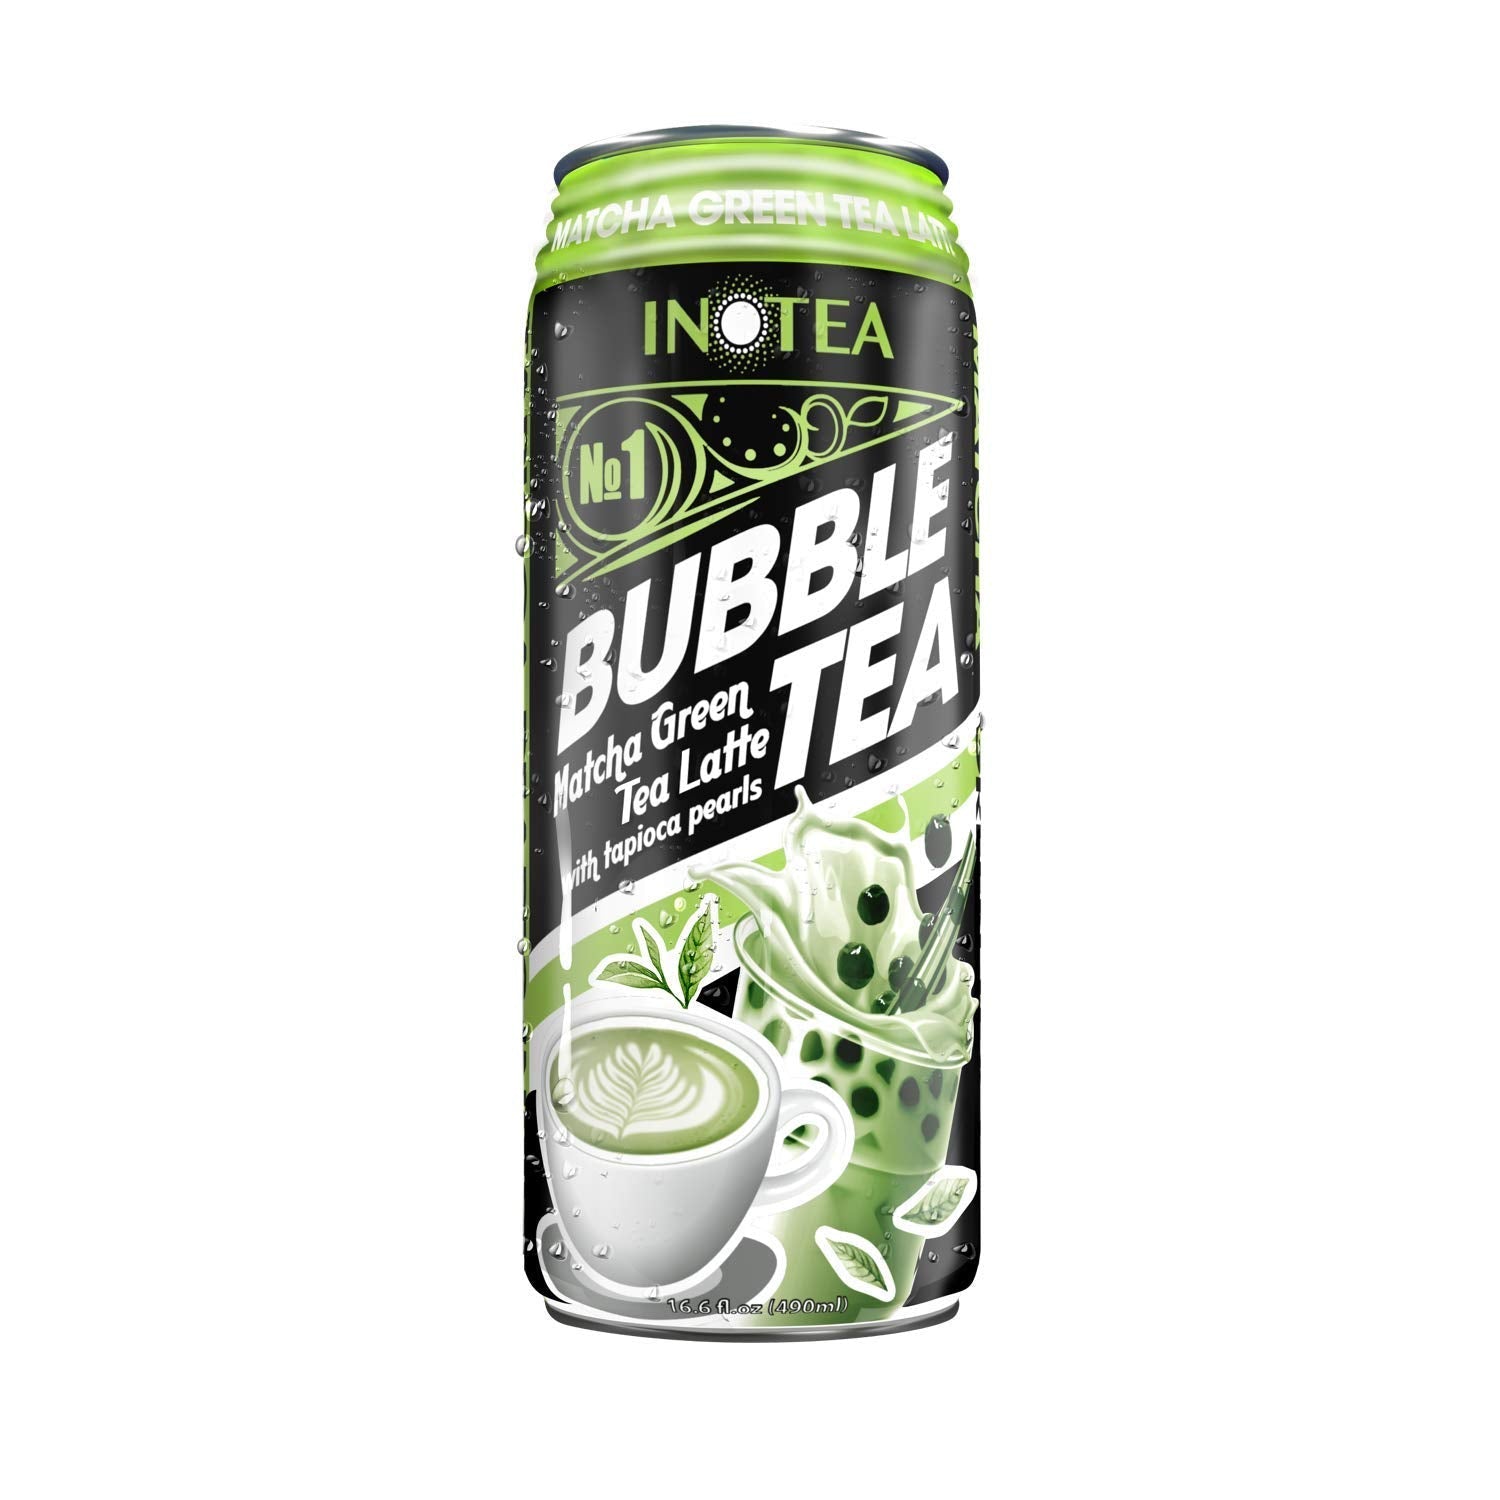 Inotea Bubble Tea Matcha Green Tea Latte with Tapioca Pearls